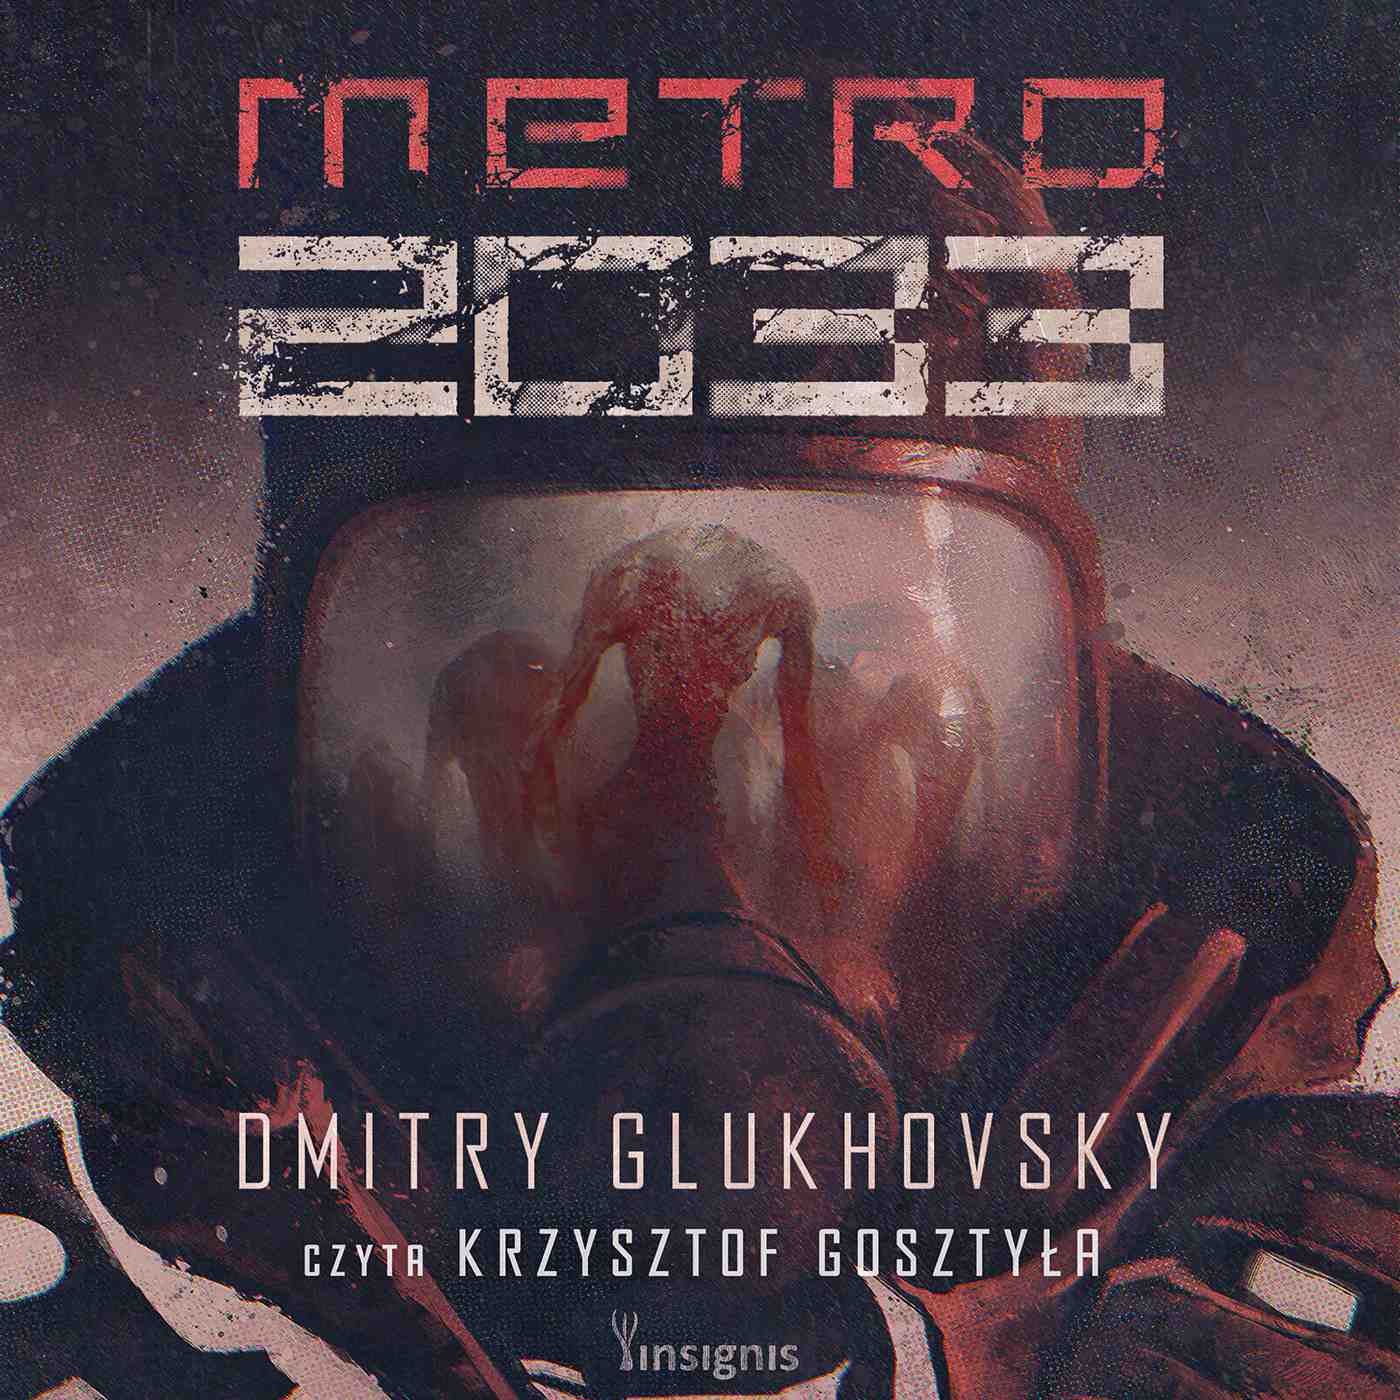 Метро 2033 книга полностью. Книга метро 2033 Глуховский.